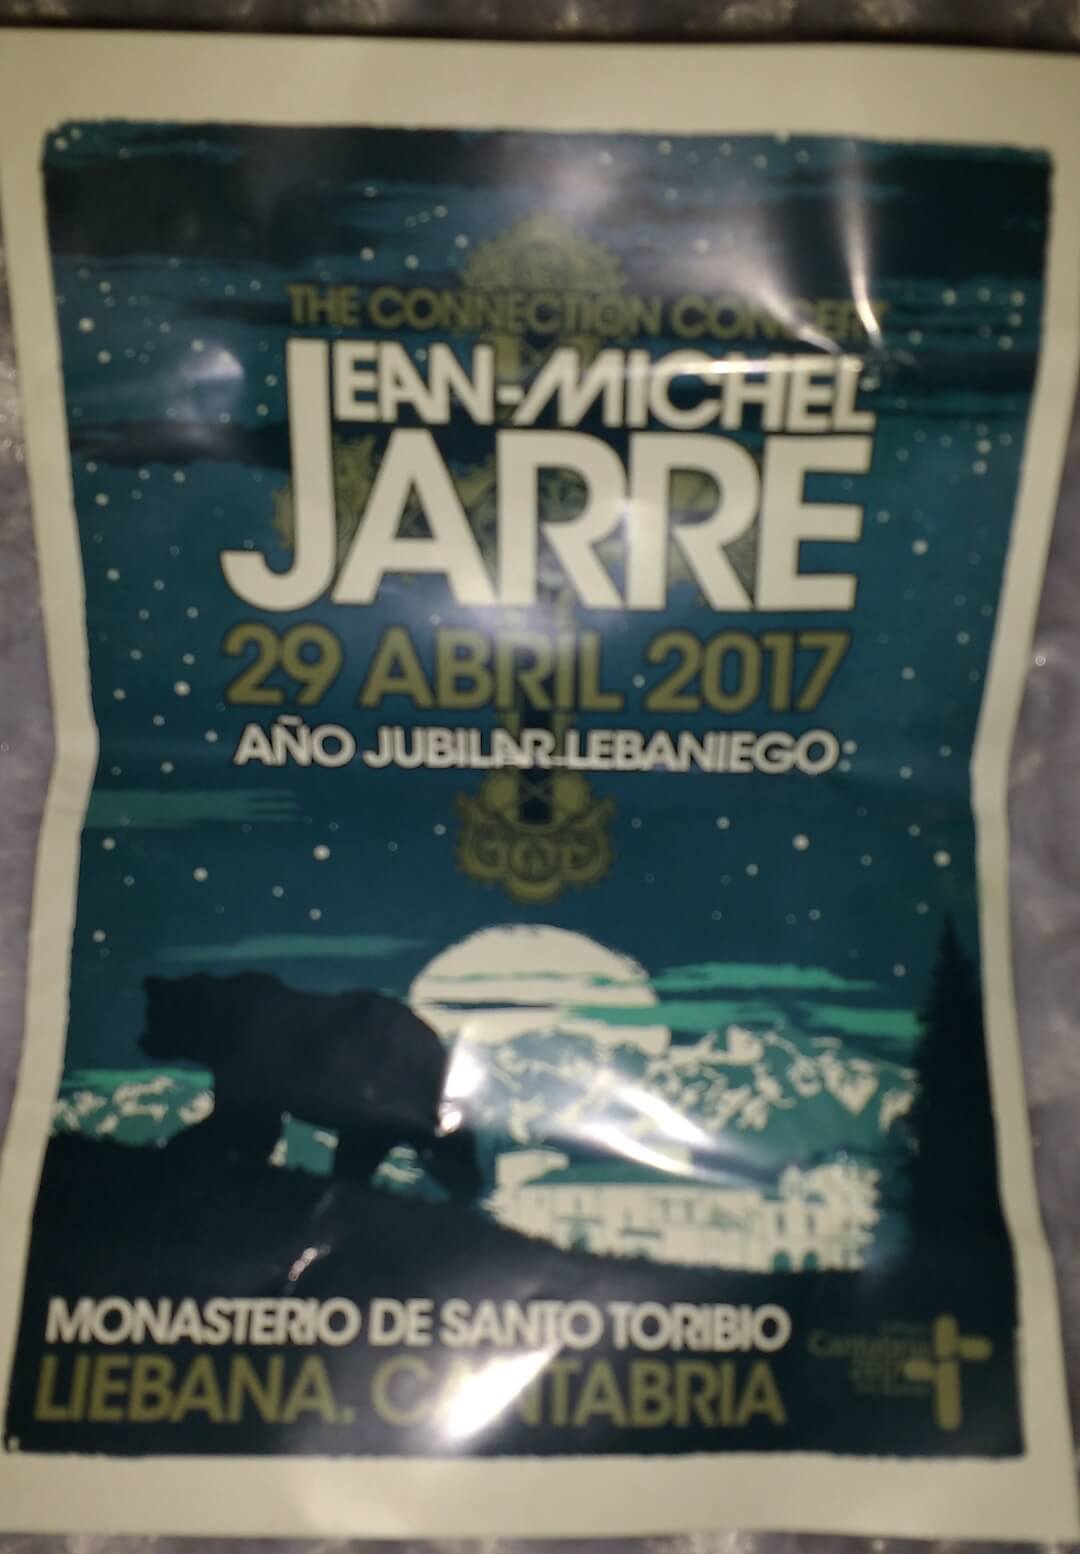 The Connection Concert - Jarre in Liébana 2017